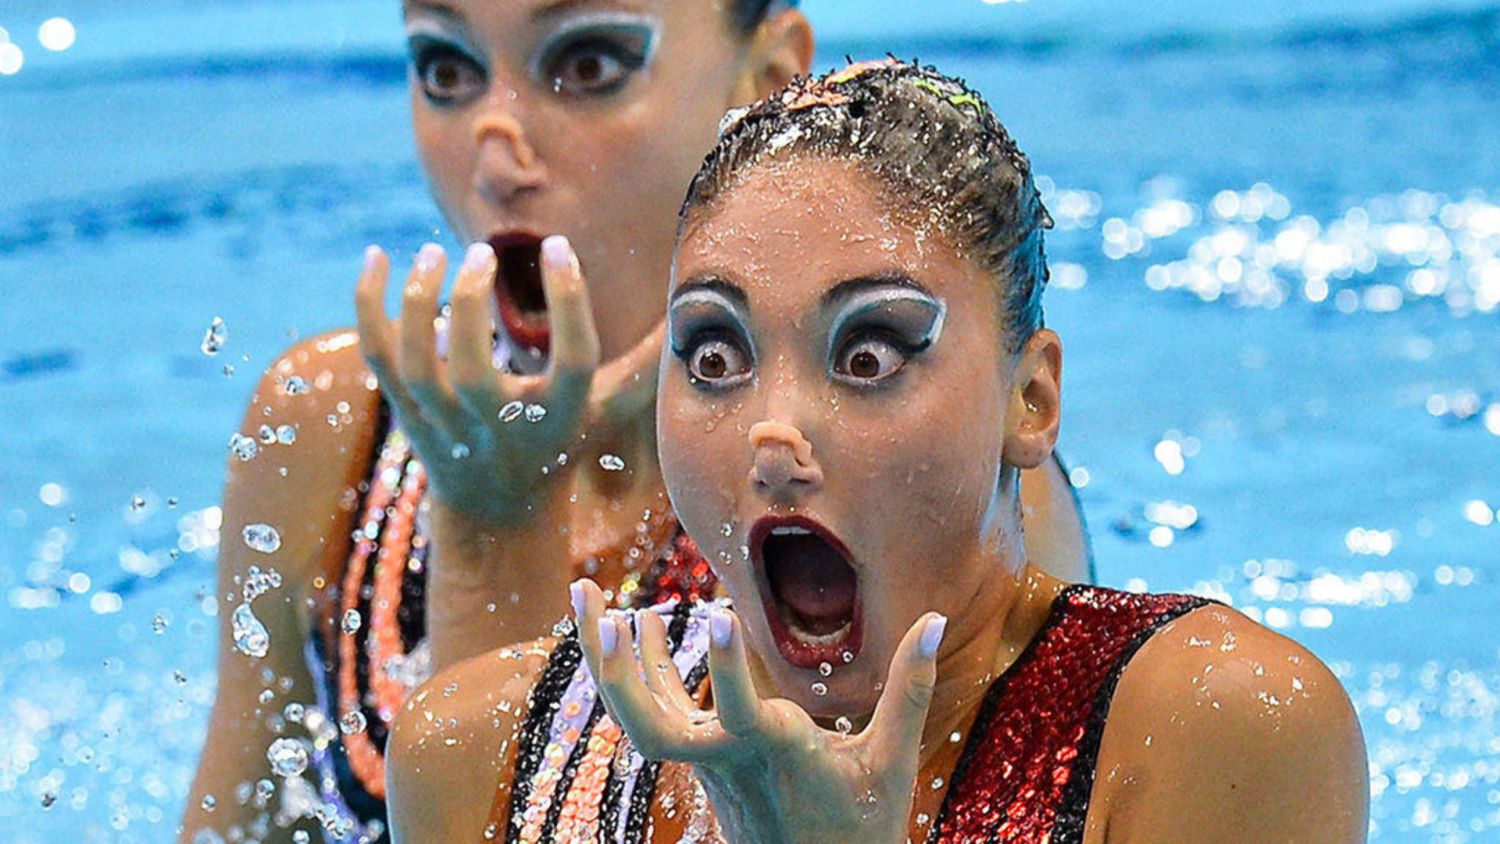 random pics - synchronized swimming makeup